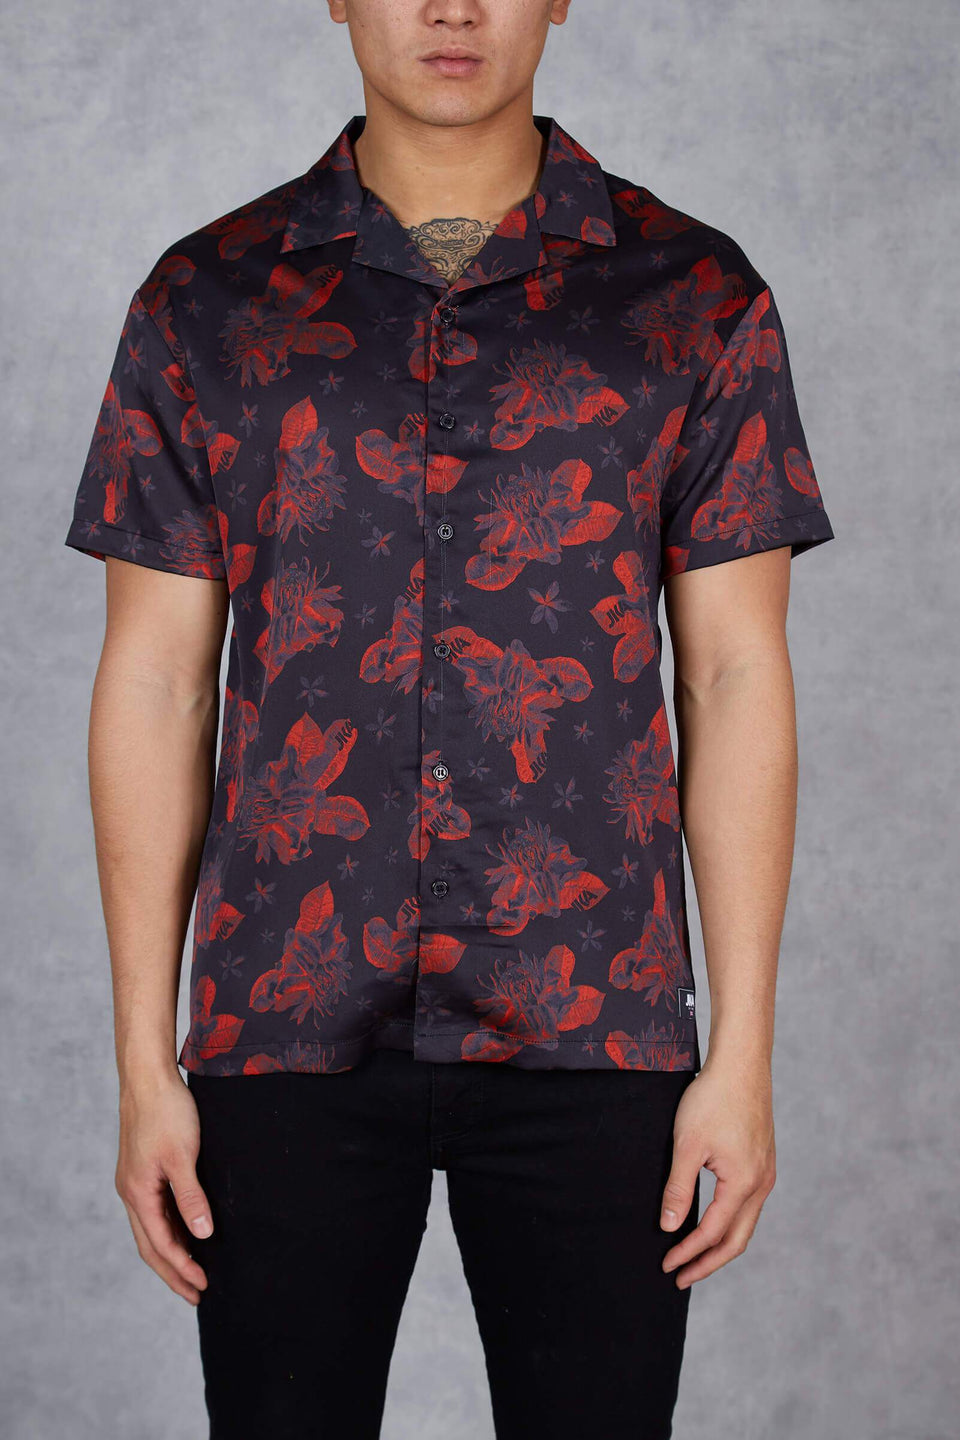 Rio Wildflower Short Sleeve Shirt - Black/Red